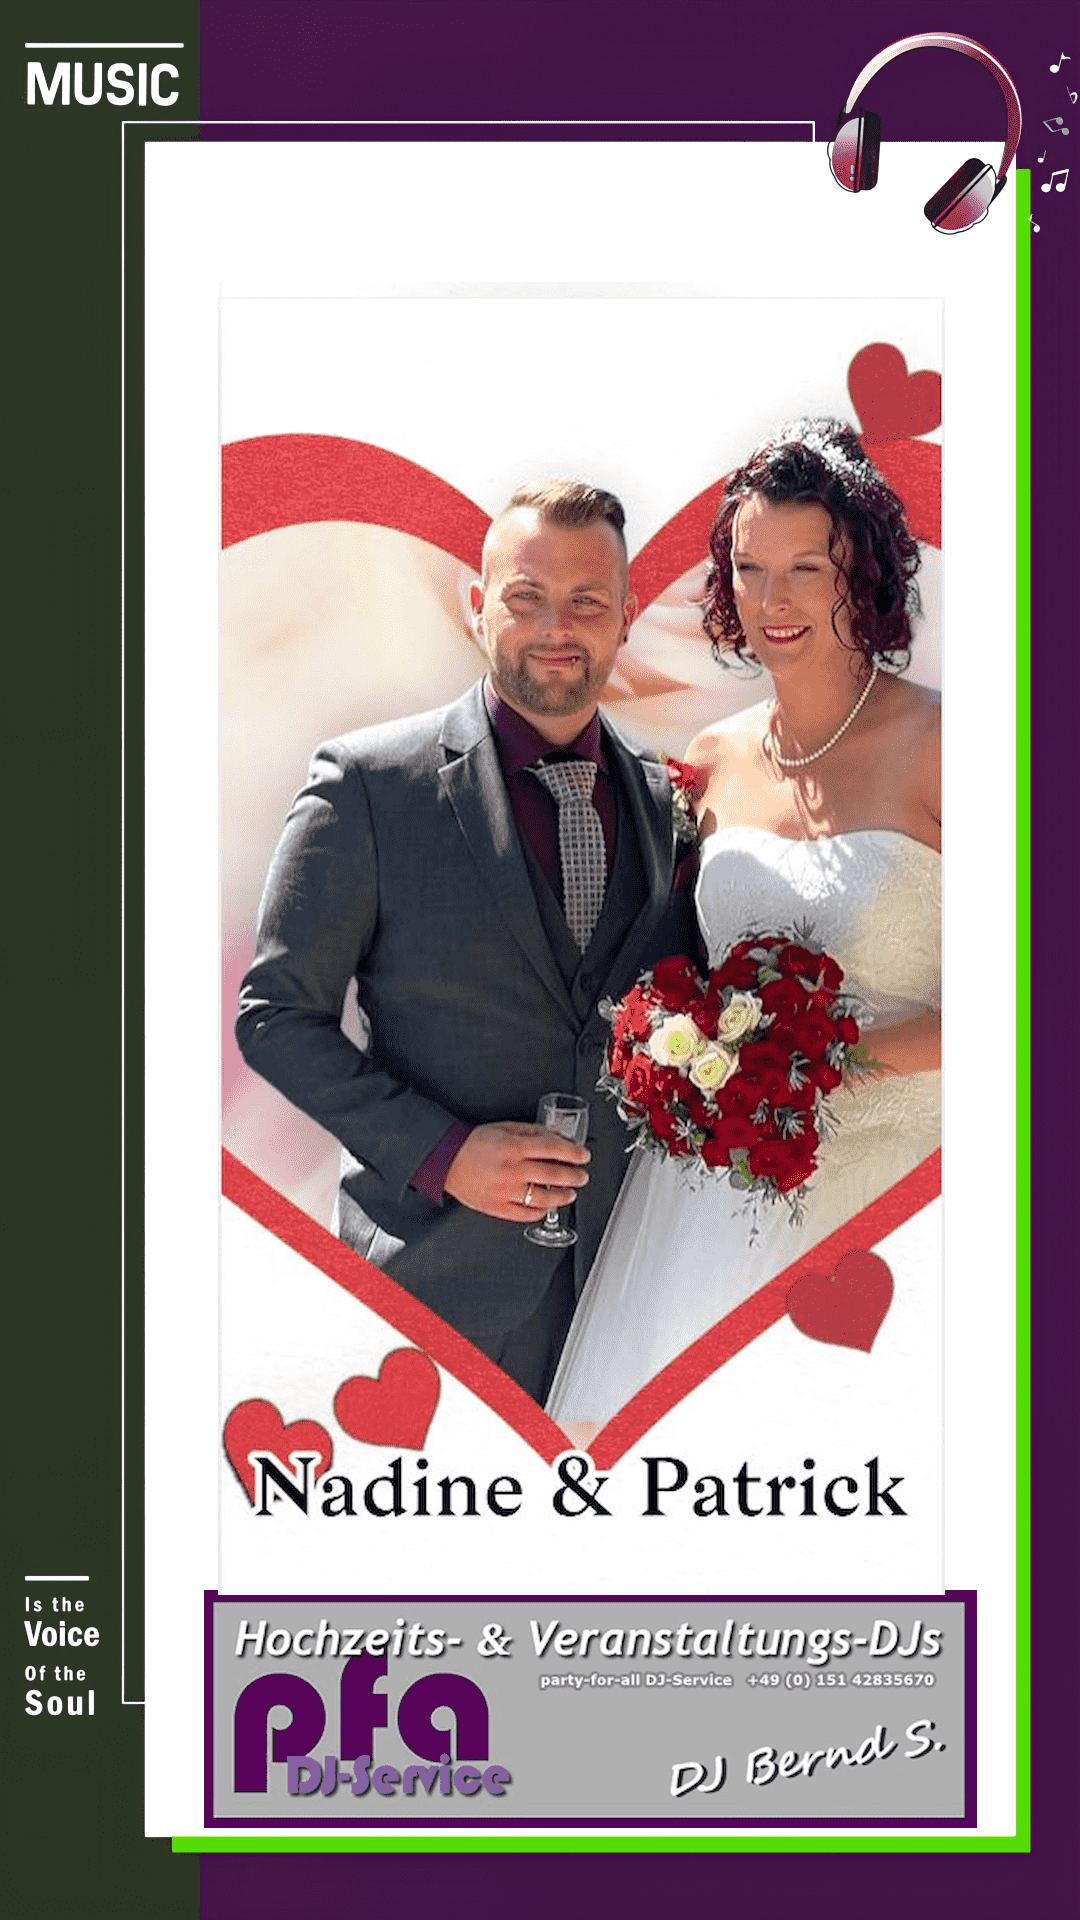 Nadine & Patrick